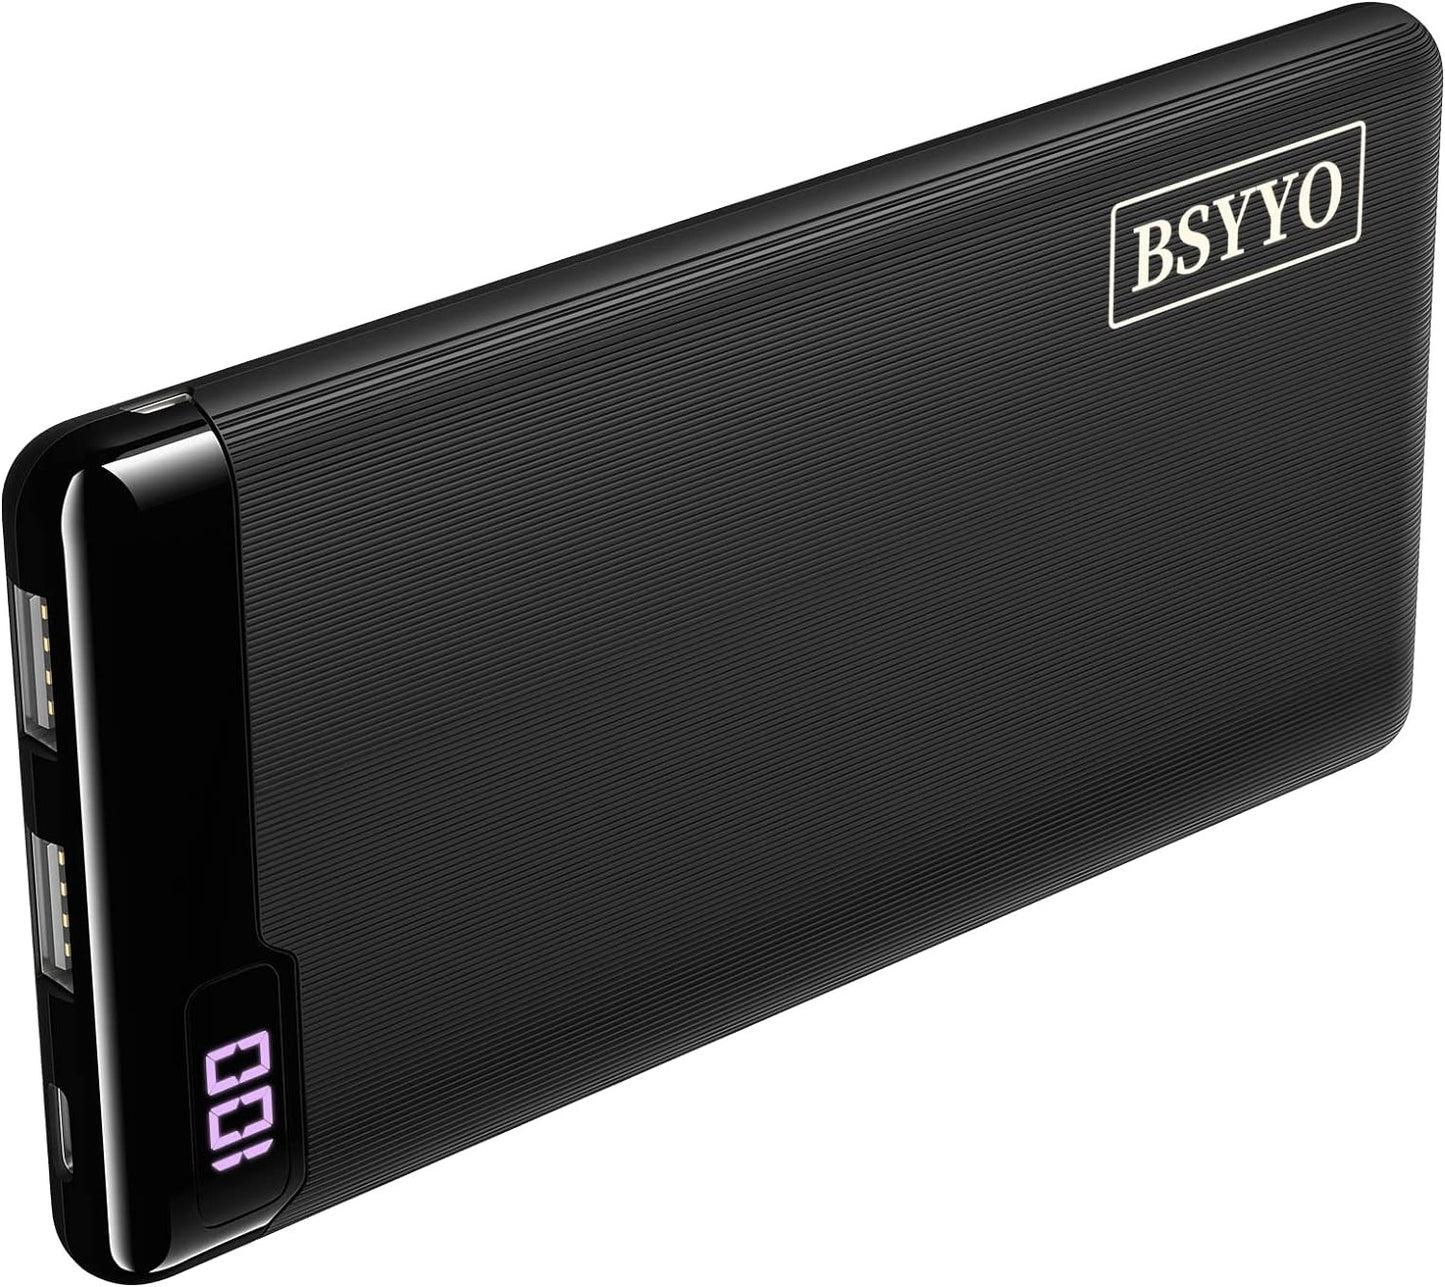 BSYYO power bank15W 10600mAh LED display portable charger 2 USB A ports 1 USB C